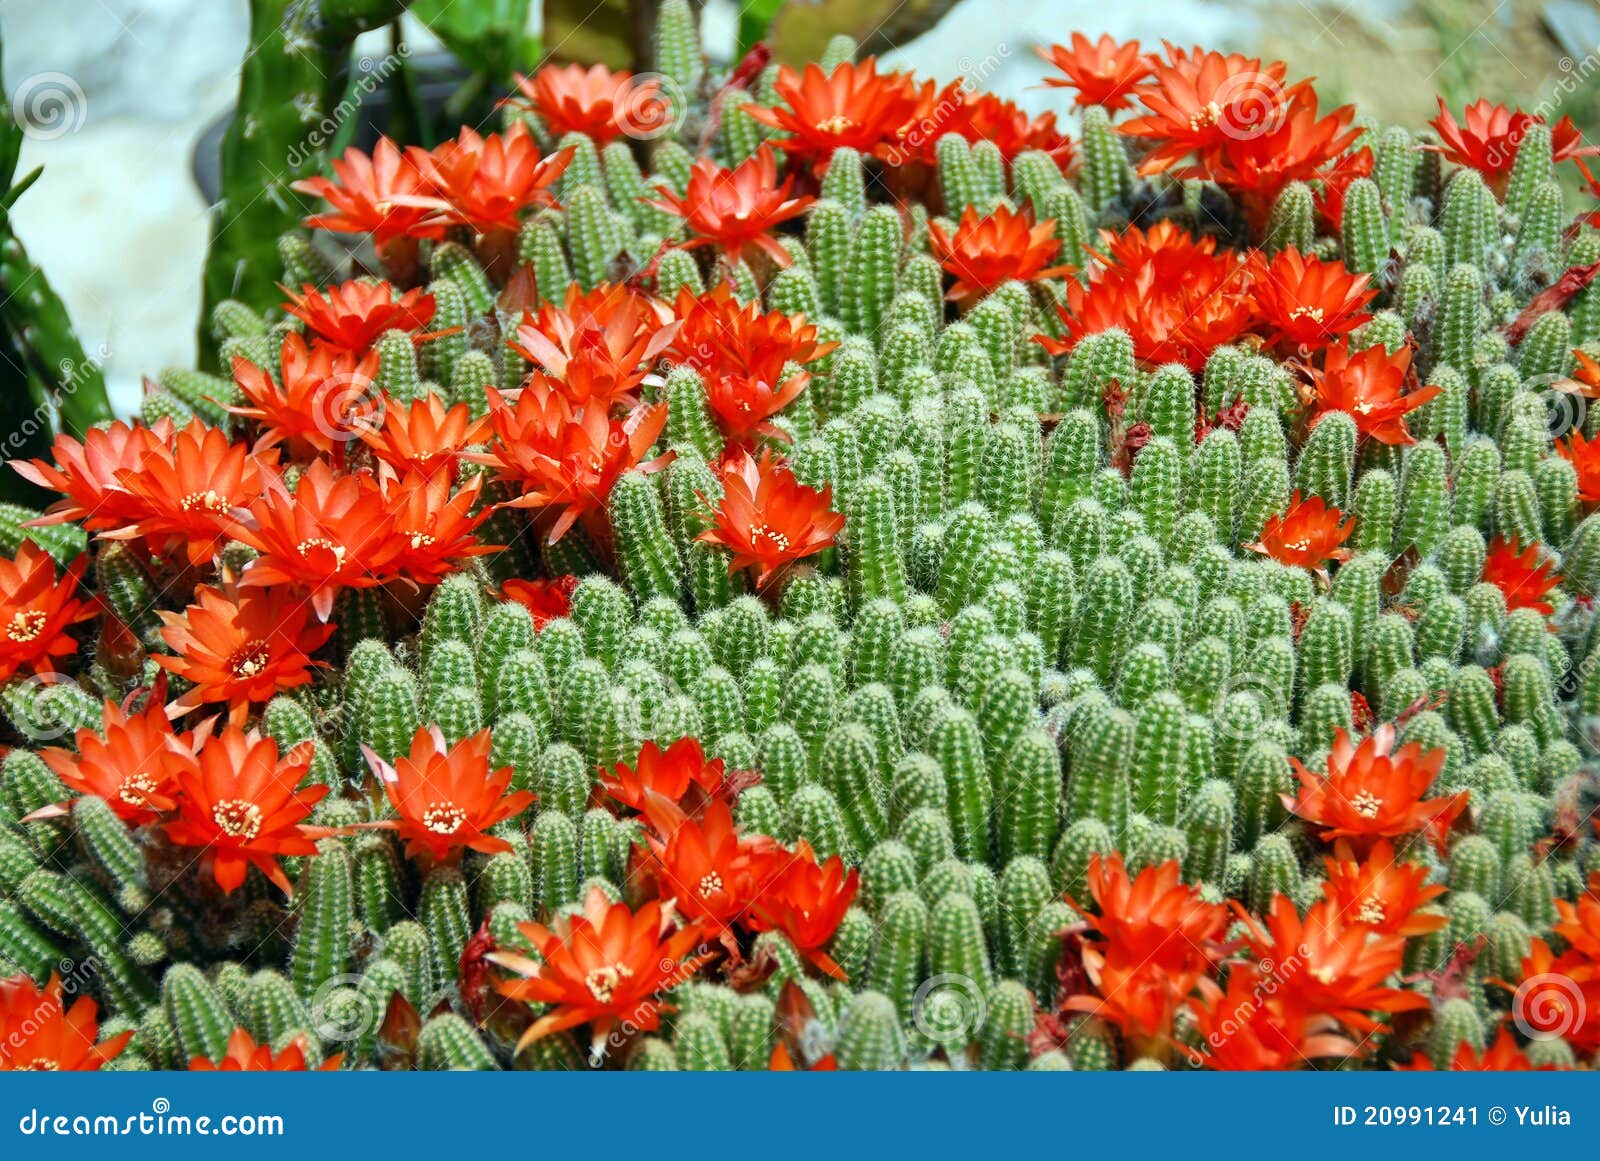 cactus red flowers